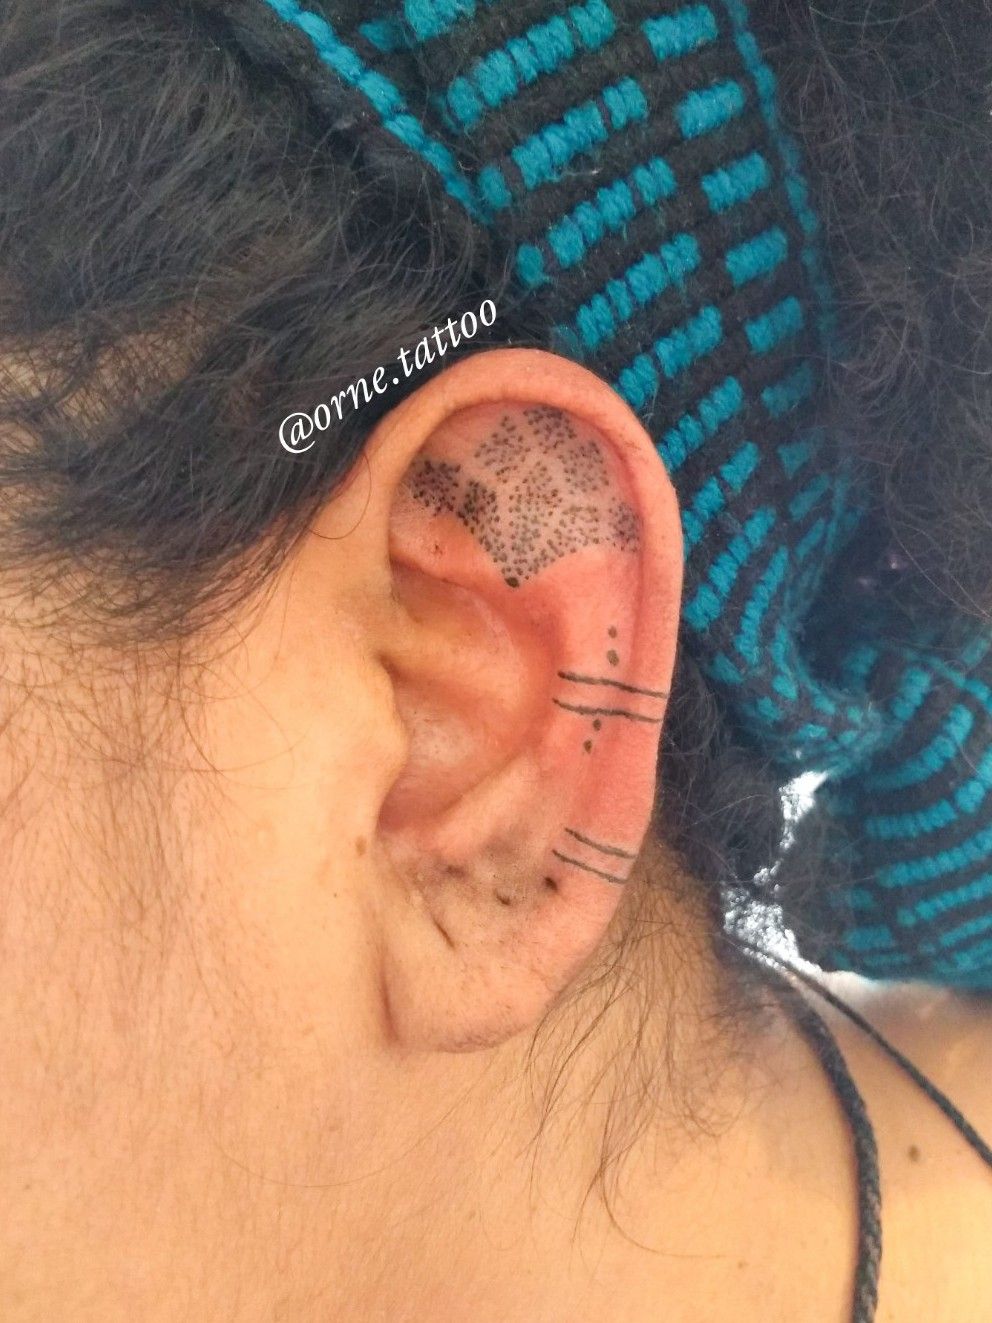 Some ear tattoos, done by me, at Nebula tattoo, Curitiba Brazil : r/tattoos